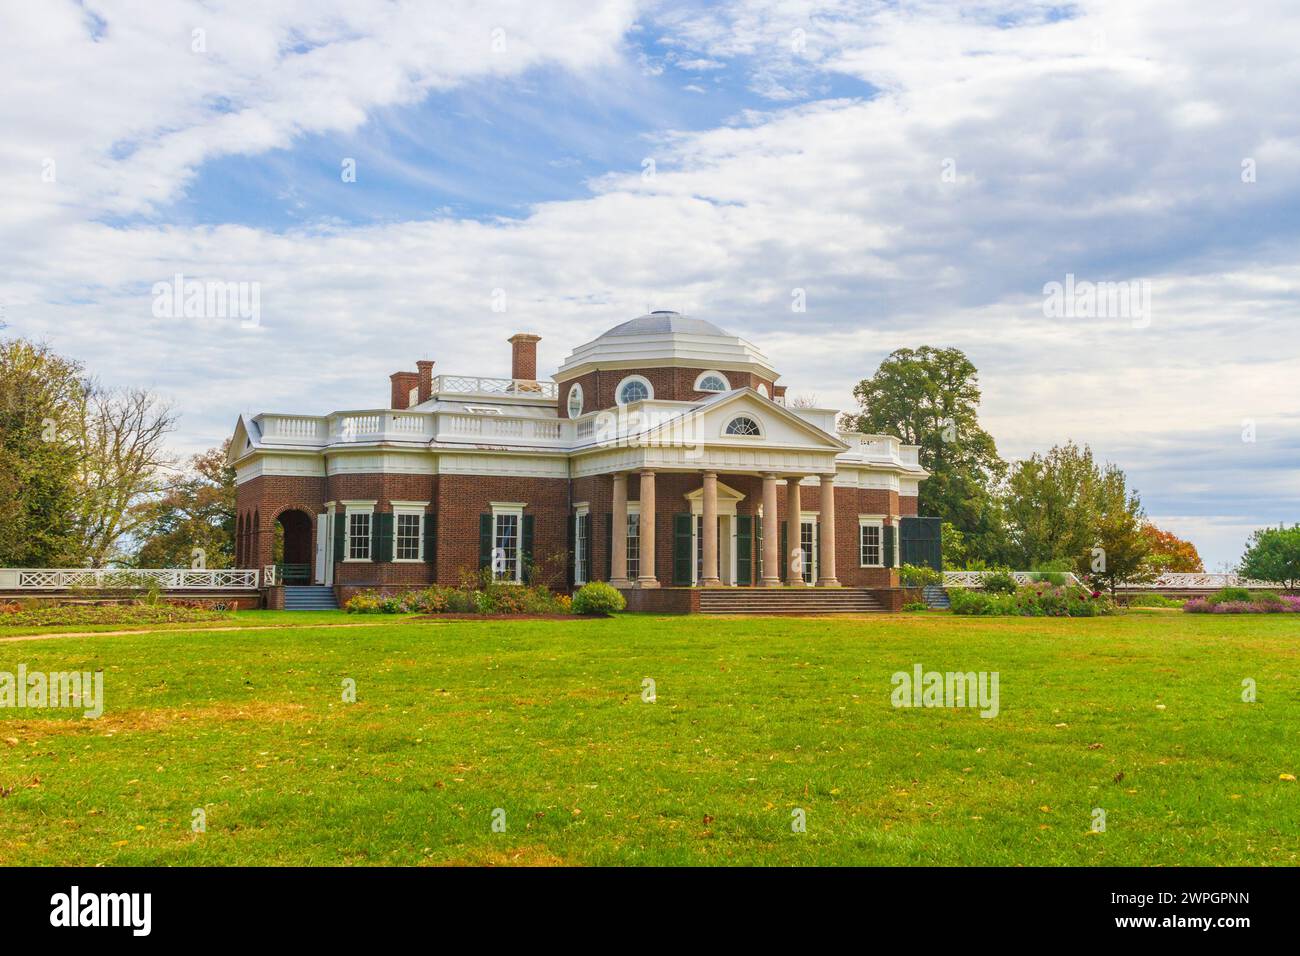 World Heritage Site, Monticello plantation and estates, home of Thomas Jefferson, third president of the United States. Stock Photo